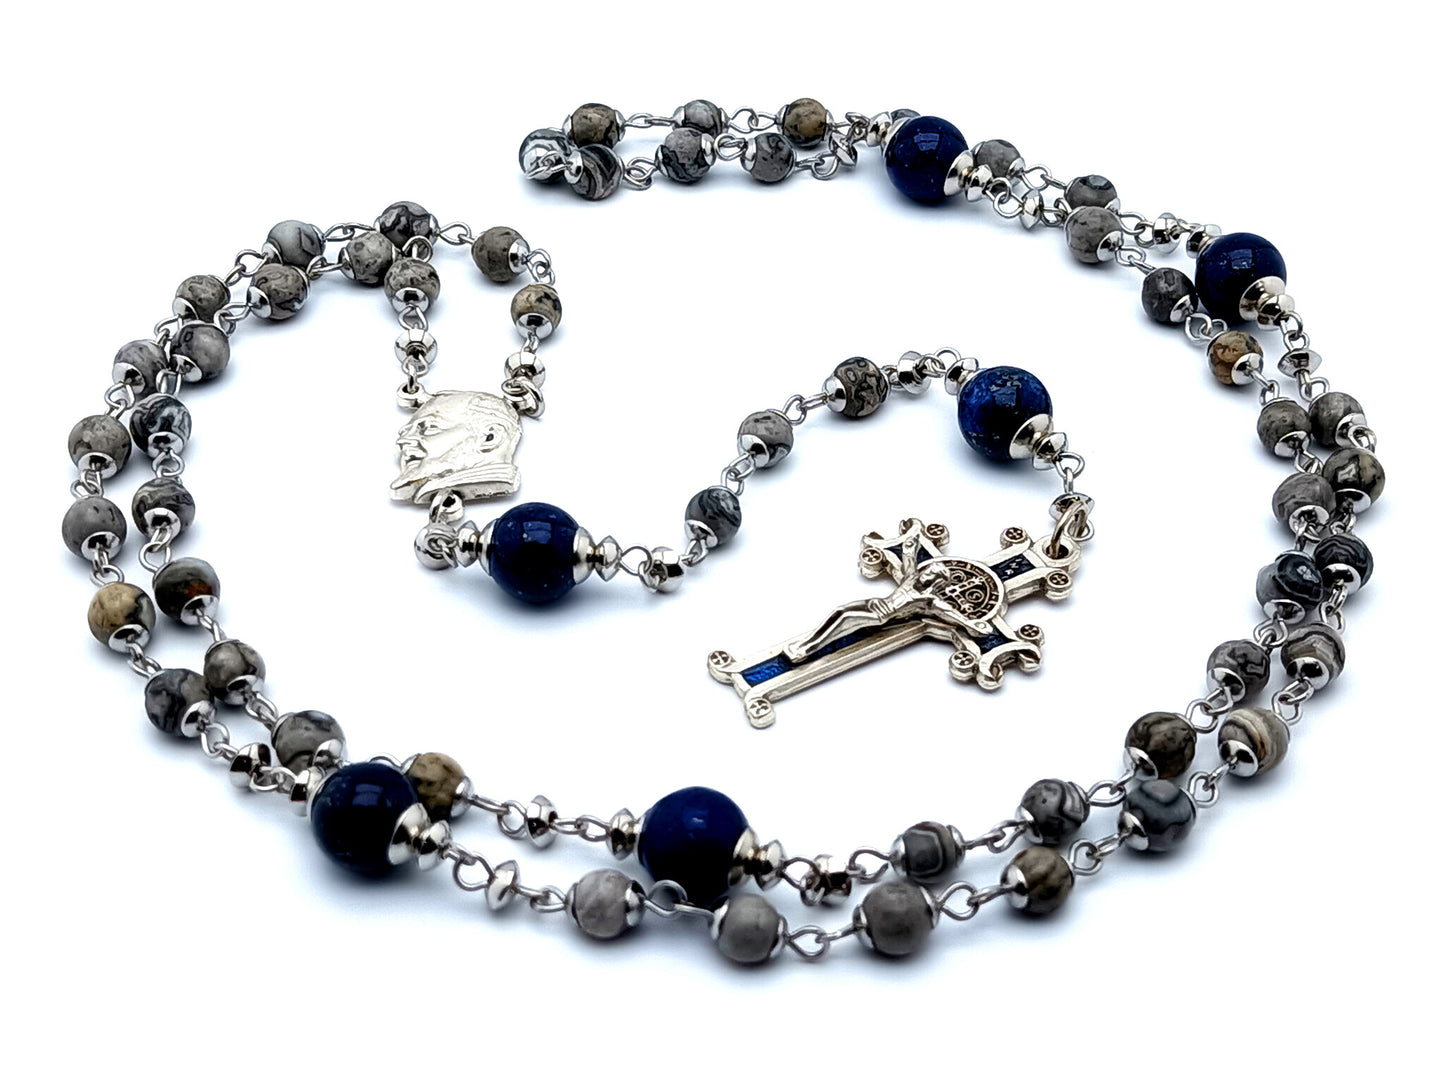 Saint Padre Pio unique rosary beads with lapis lazuli and jasper gemstone beads and Saint Benedict scroll enamel crucifix.